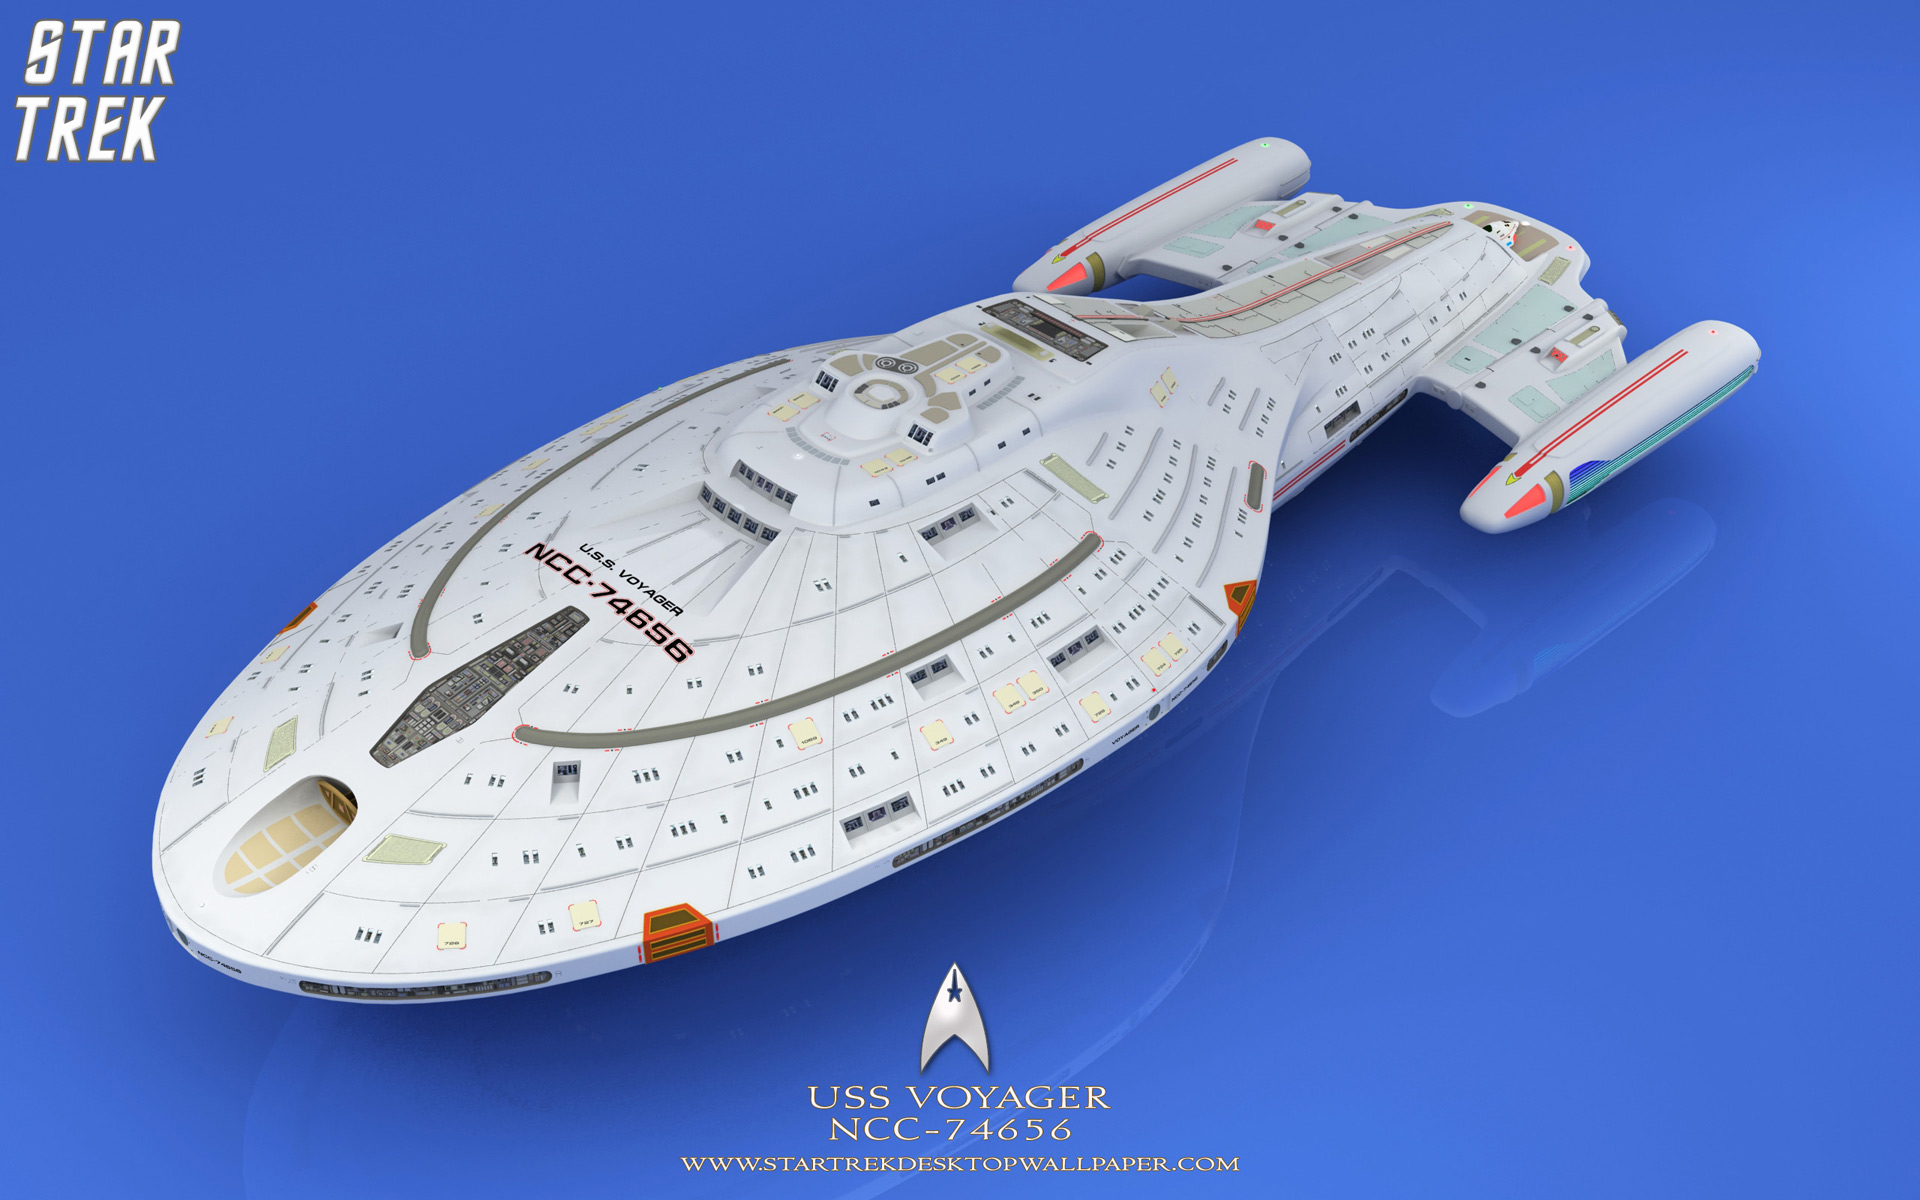 - Star Trek 3D Model USS Voyager NCC-74656 - free Star Trek computer desktop wallpaper, pictures, images.